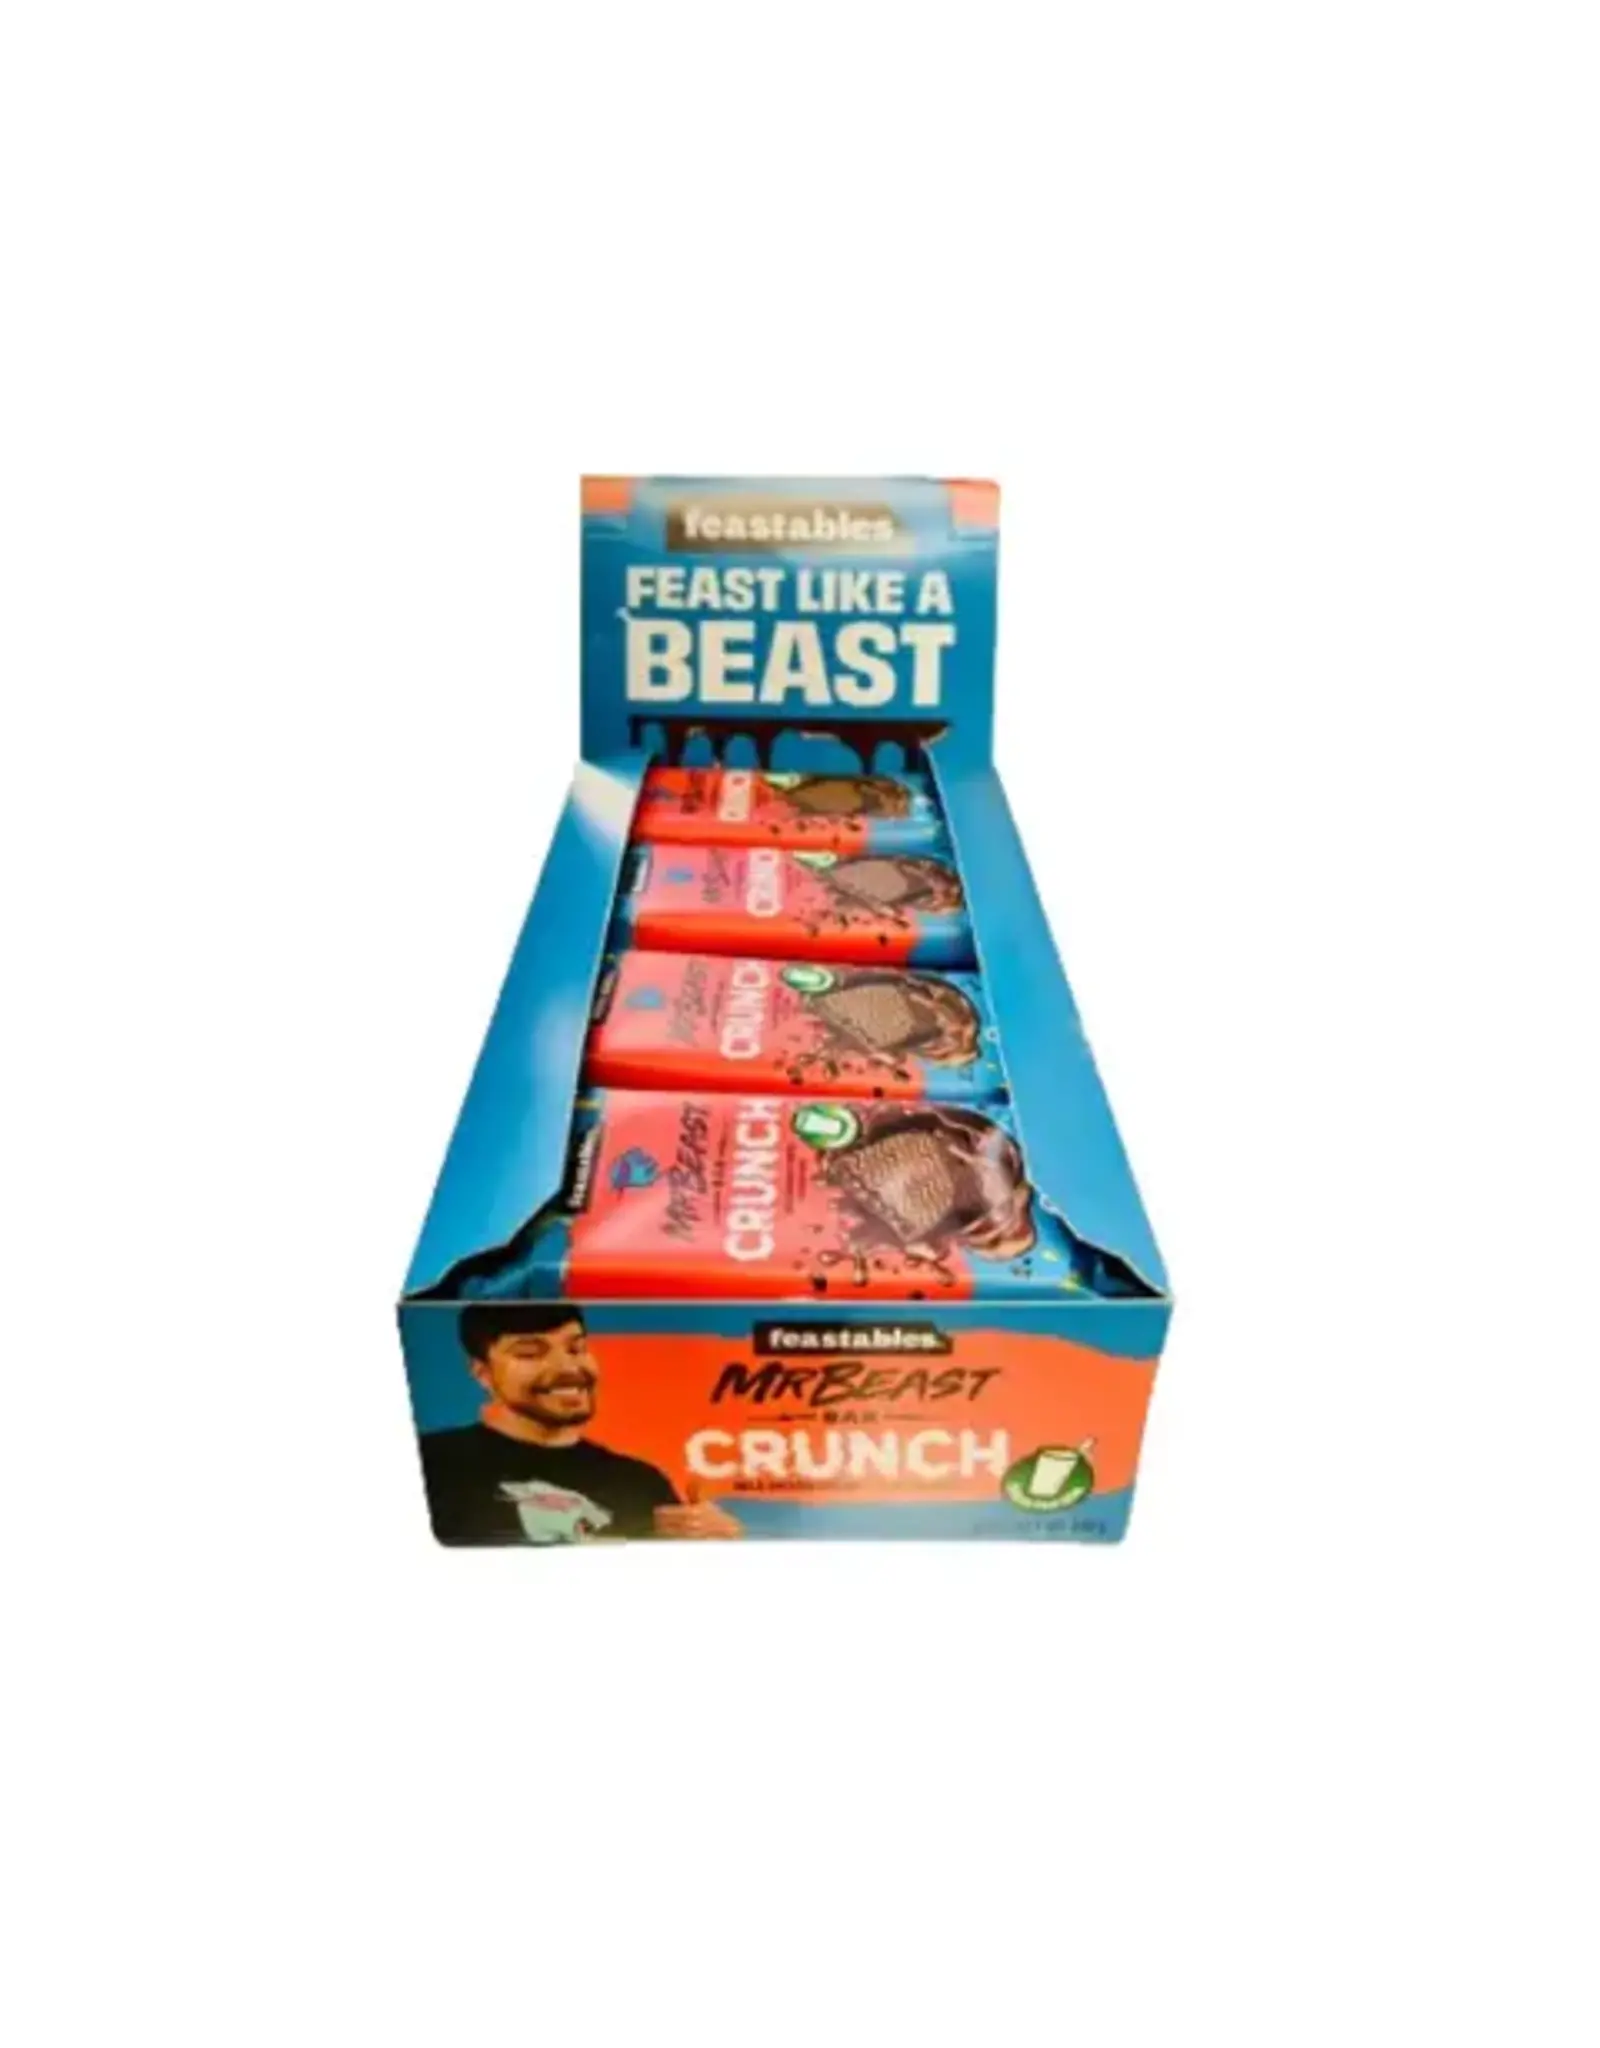 Mr Beast Feastables Chocolate Bar - Crunch Milk Chocolate With Puffed Rice - 35g